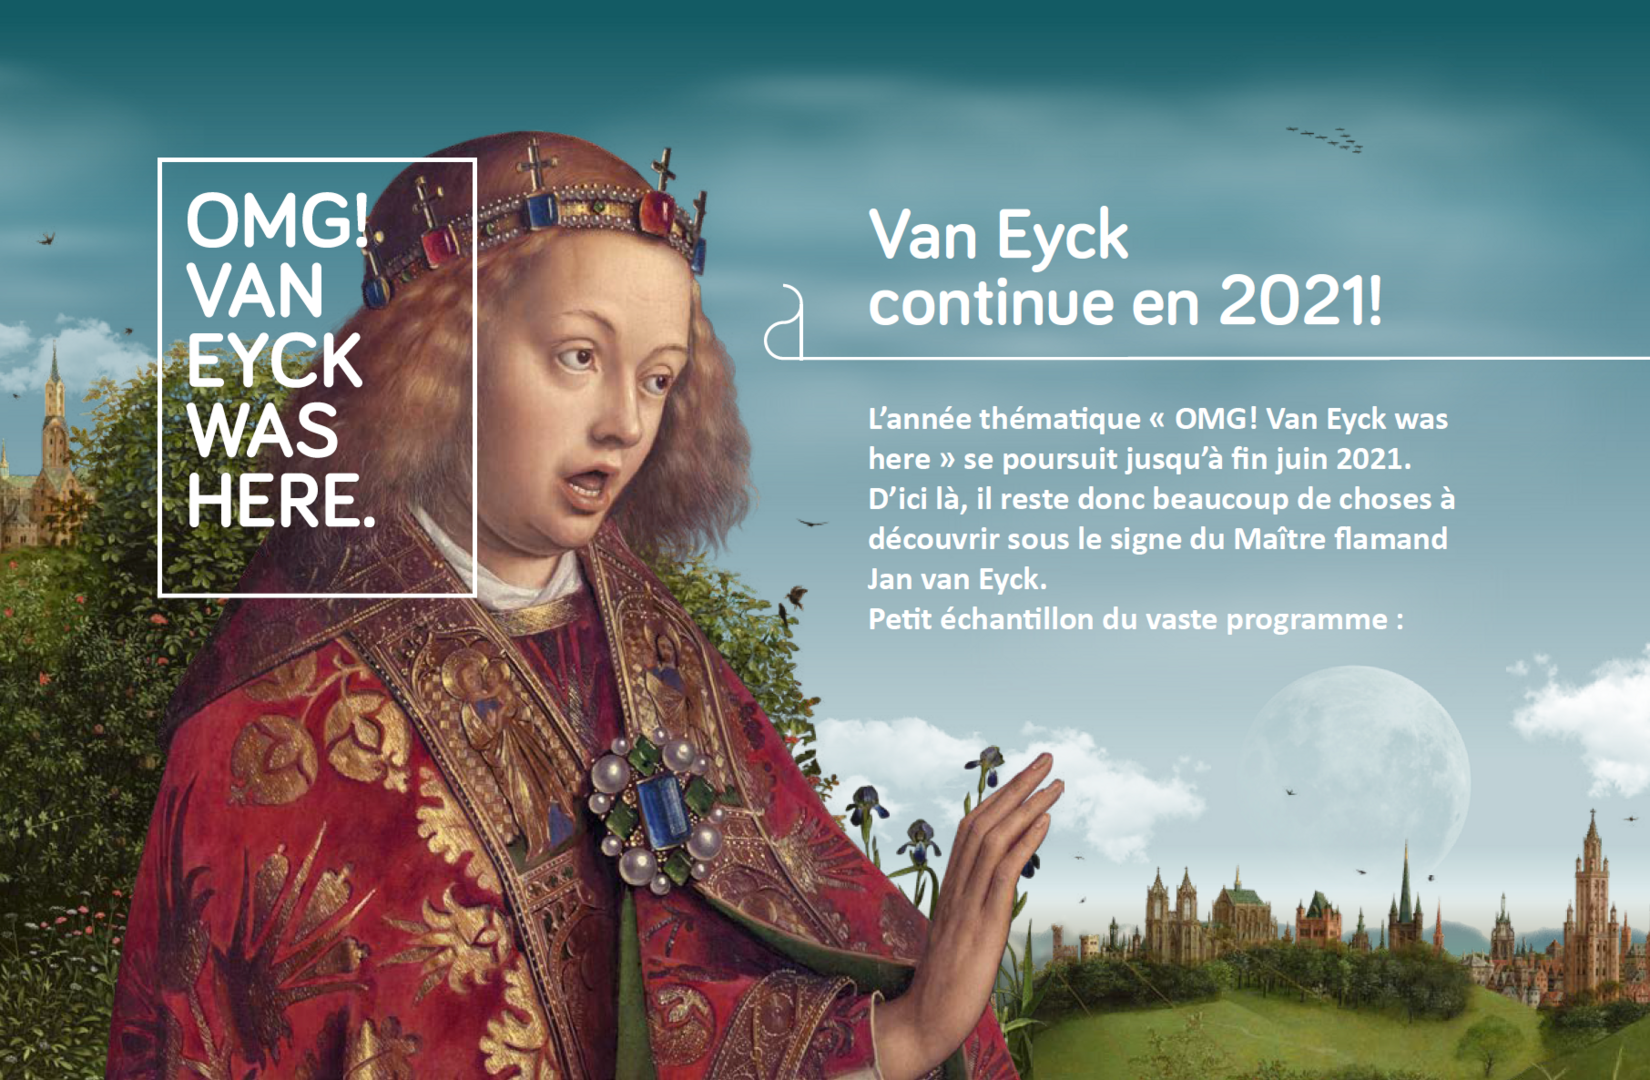 OMG! Van Eyck was here. continue en 2021!